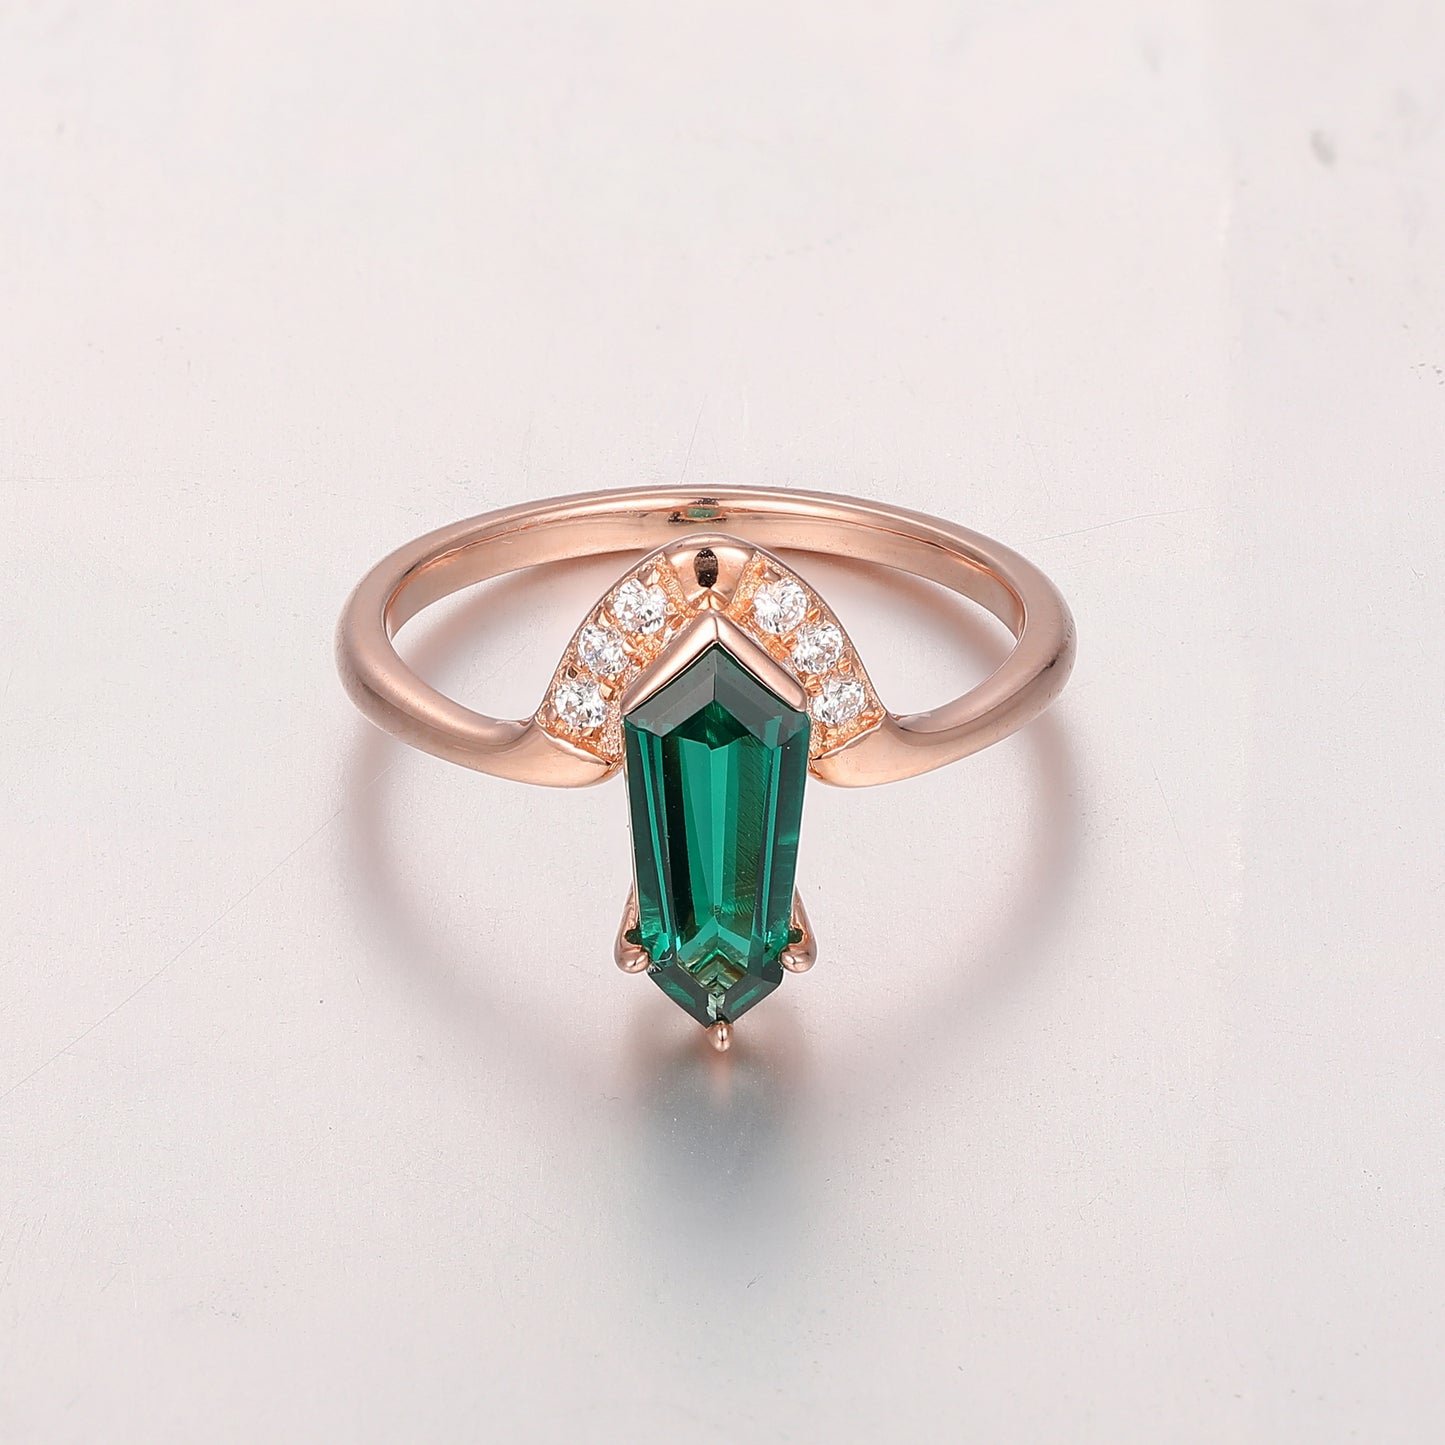 Unique 1.10CT Irregular Hexagon Emerald Engagement Ring, 14K Rose Gold May Birthstone Wedding Anniversary Ring